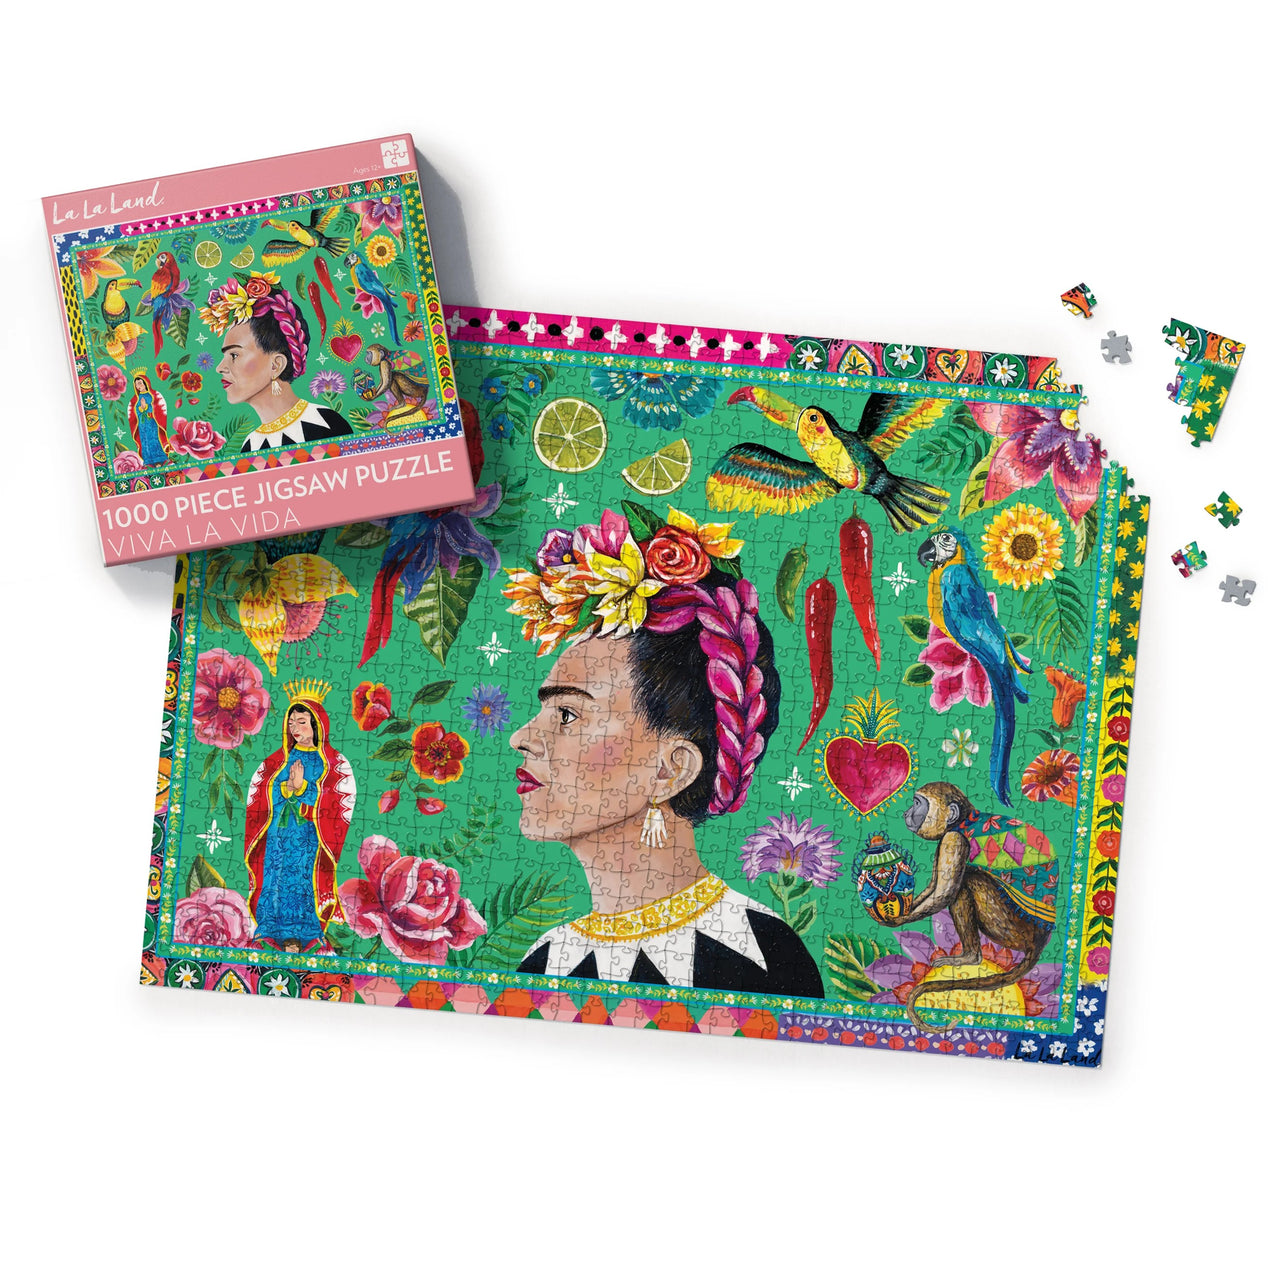 Puzzle (1000 Piece) | Viva La Vida by La La Land. Australian Art Prints and Homewares. Green Door Decor. www.greendoordecor.com.au